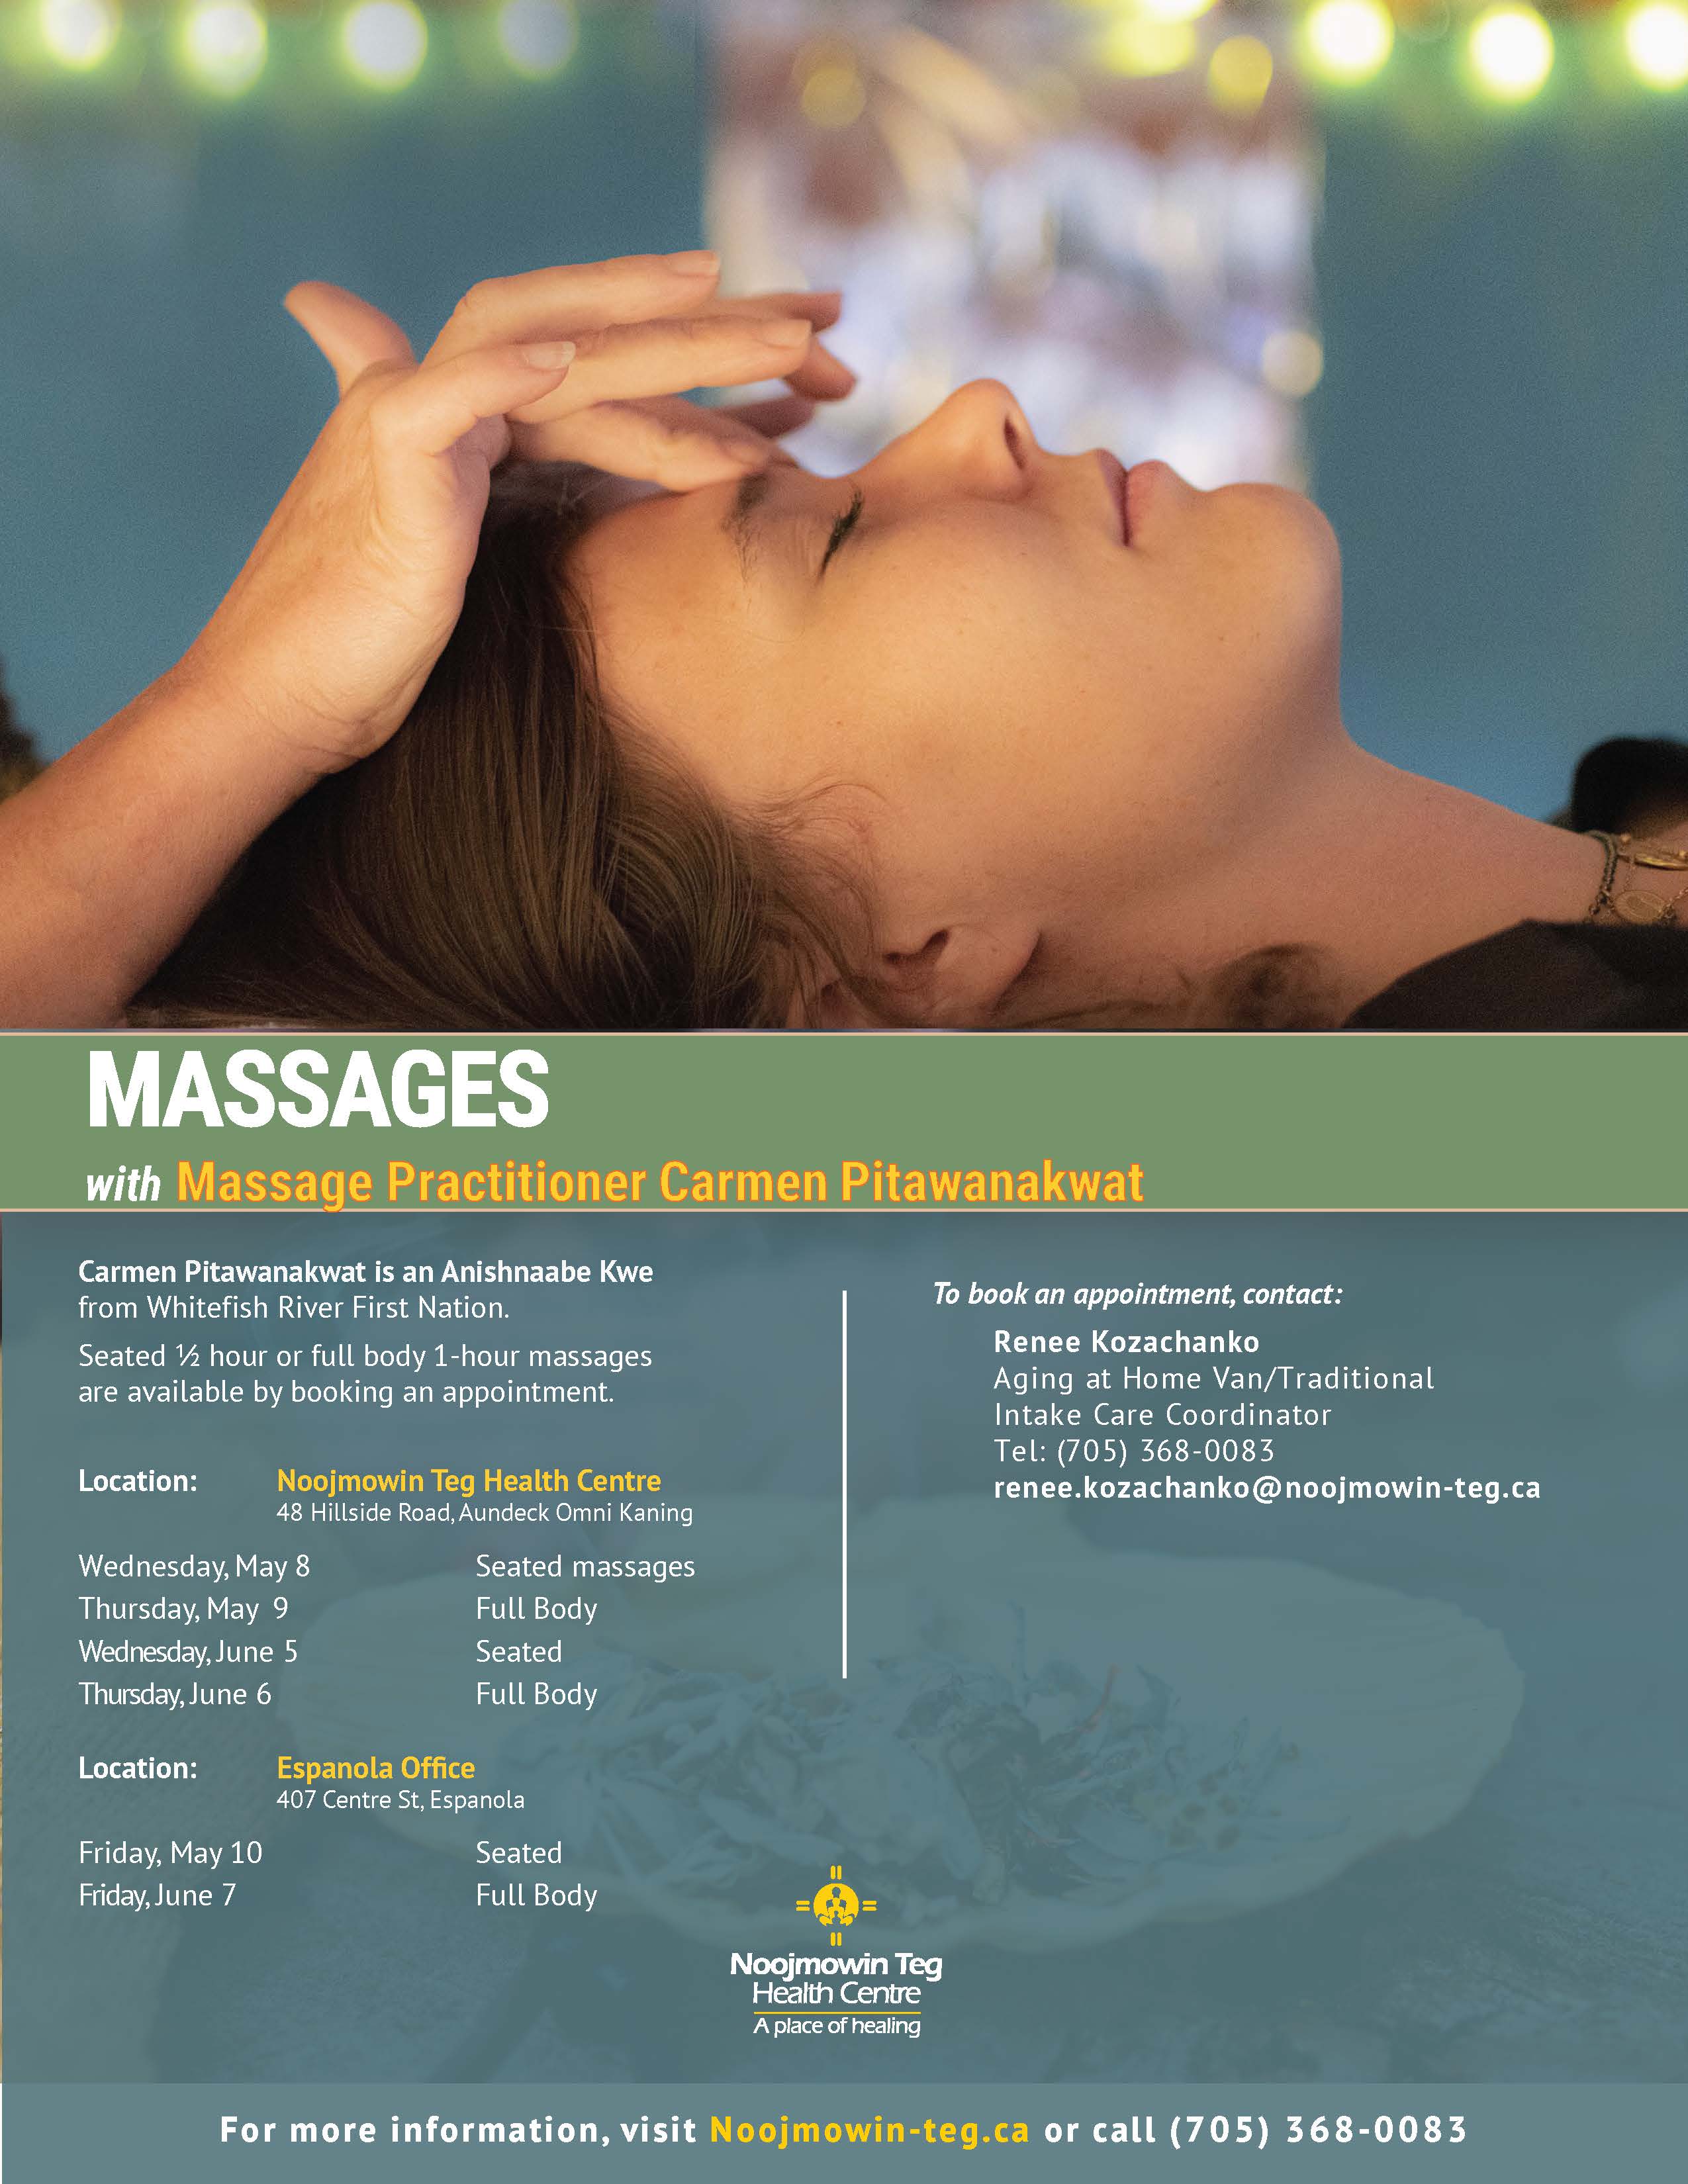 Massages with Carmen